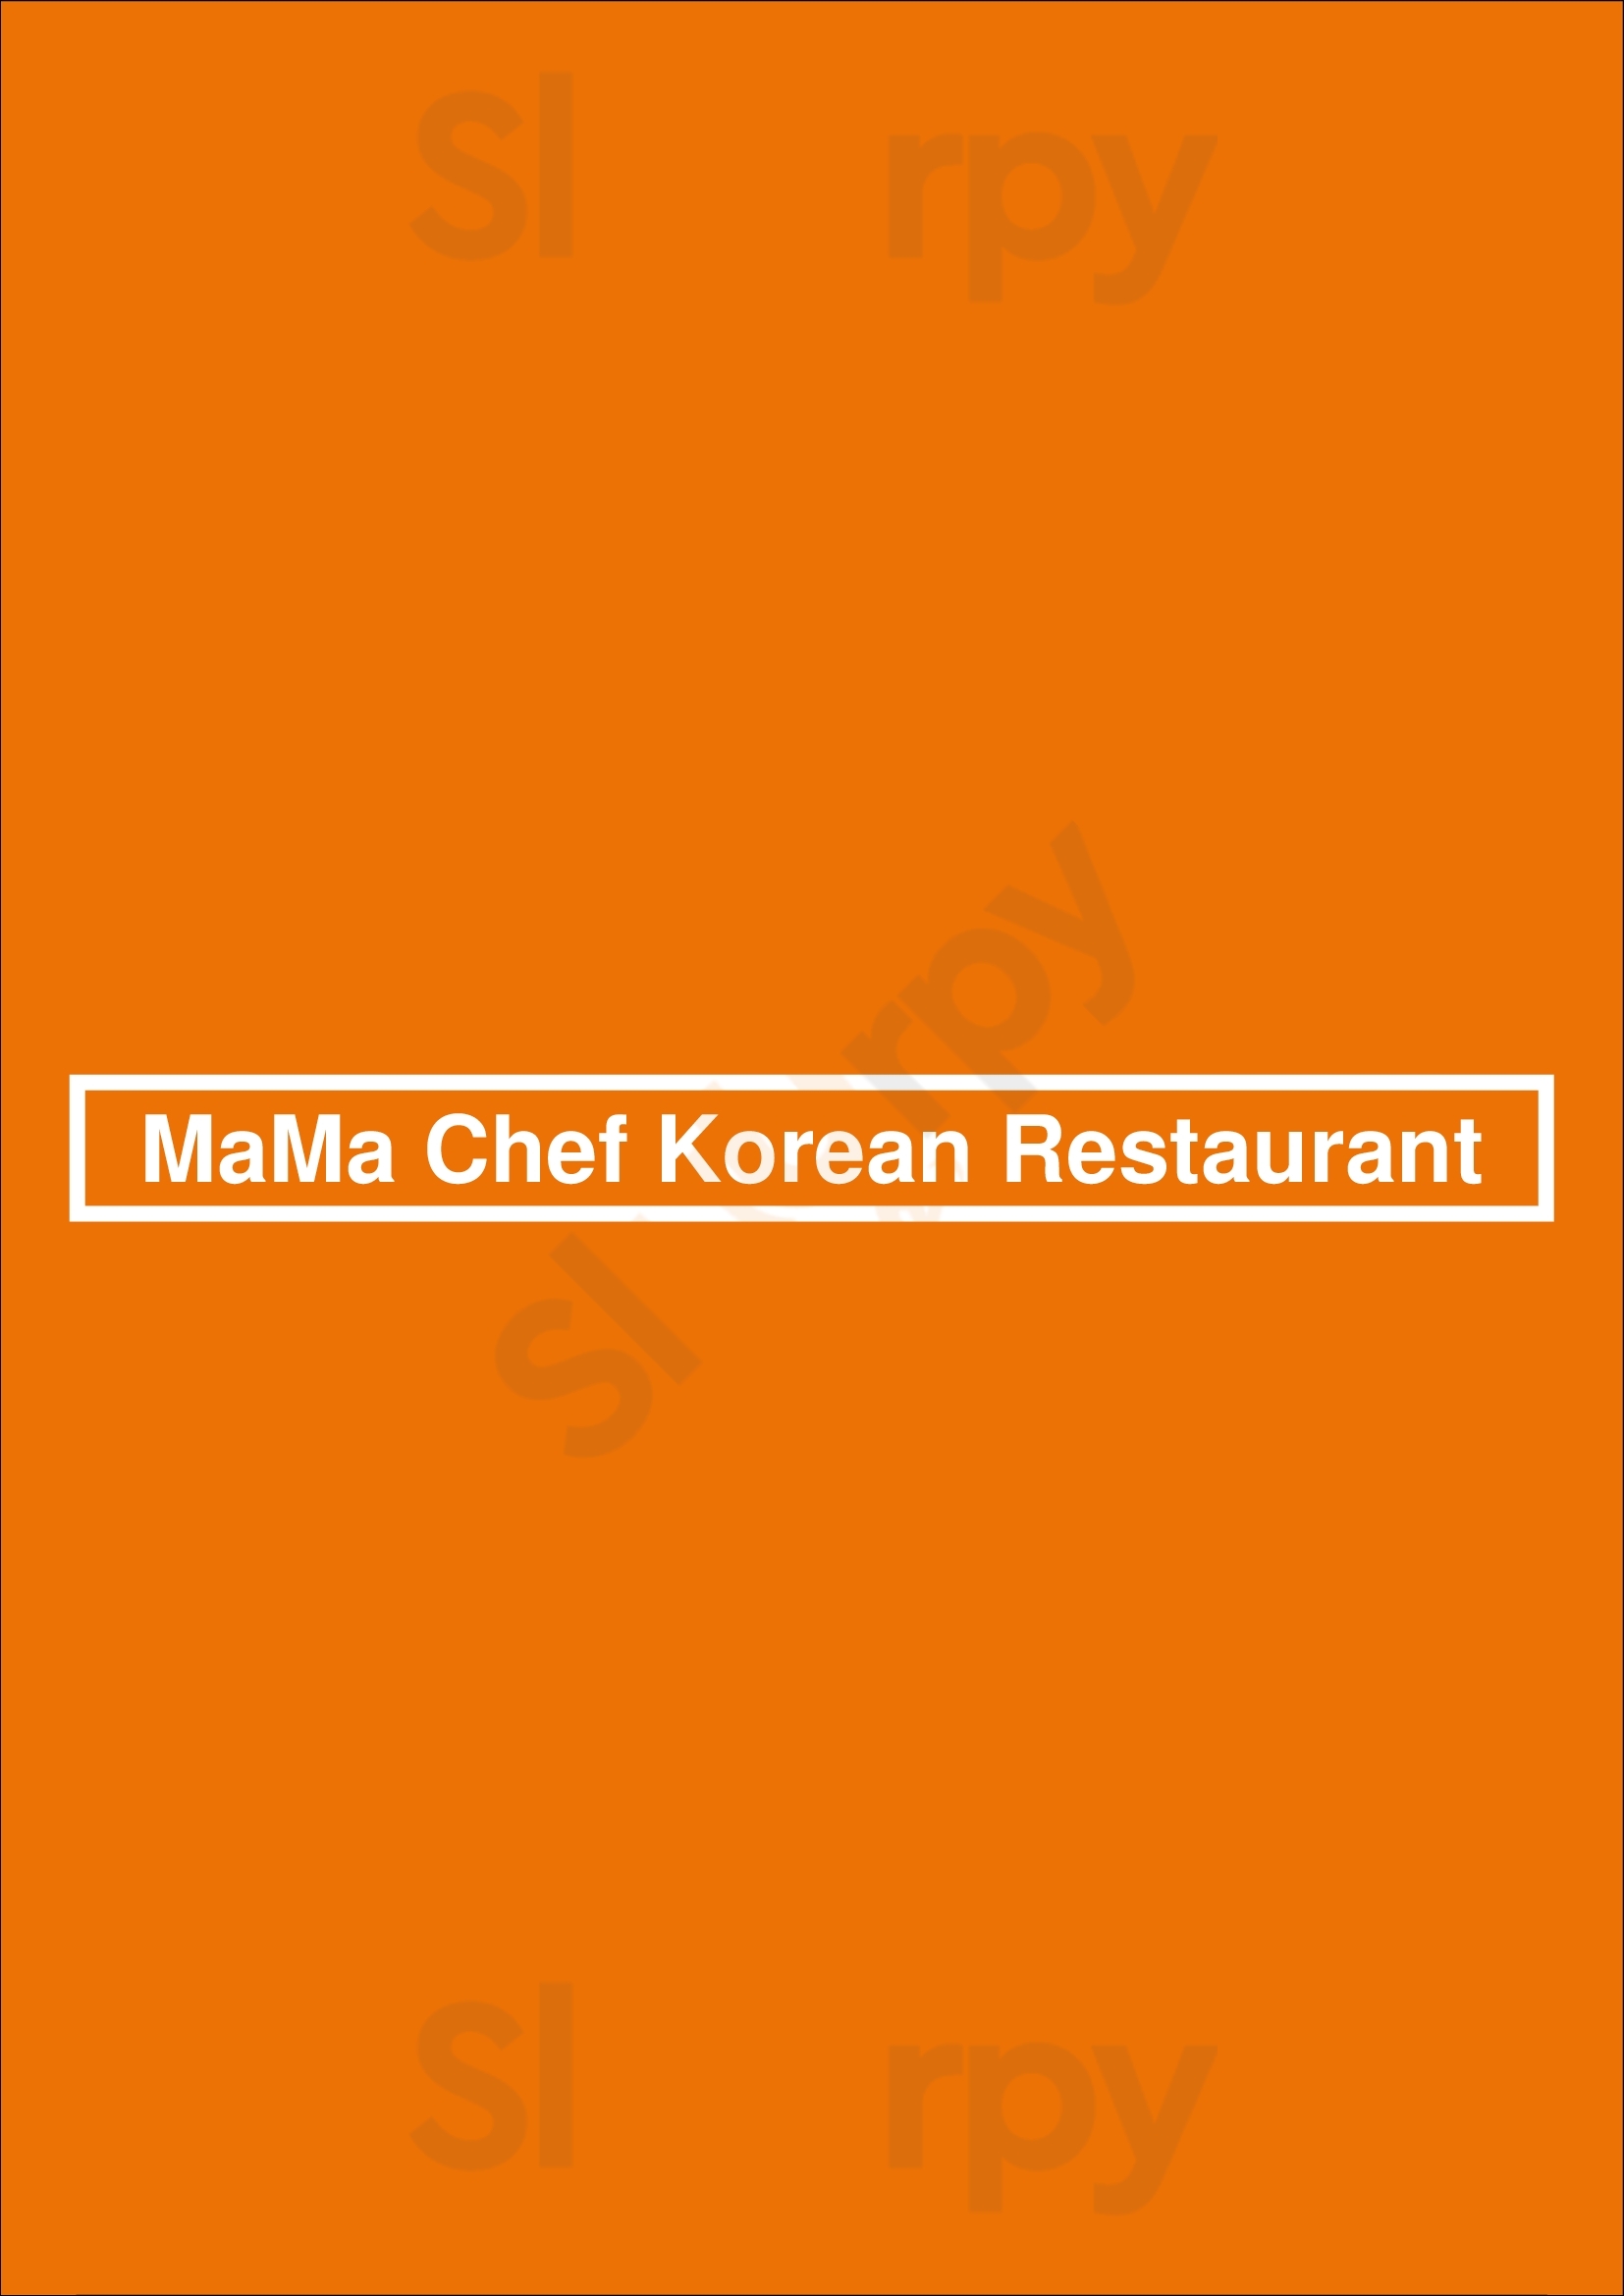 Mama Chef Korean Restaurant Toronto Menu - 1